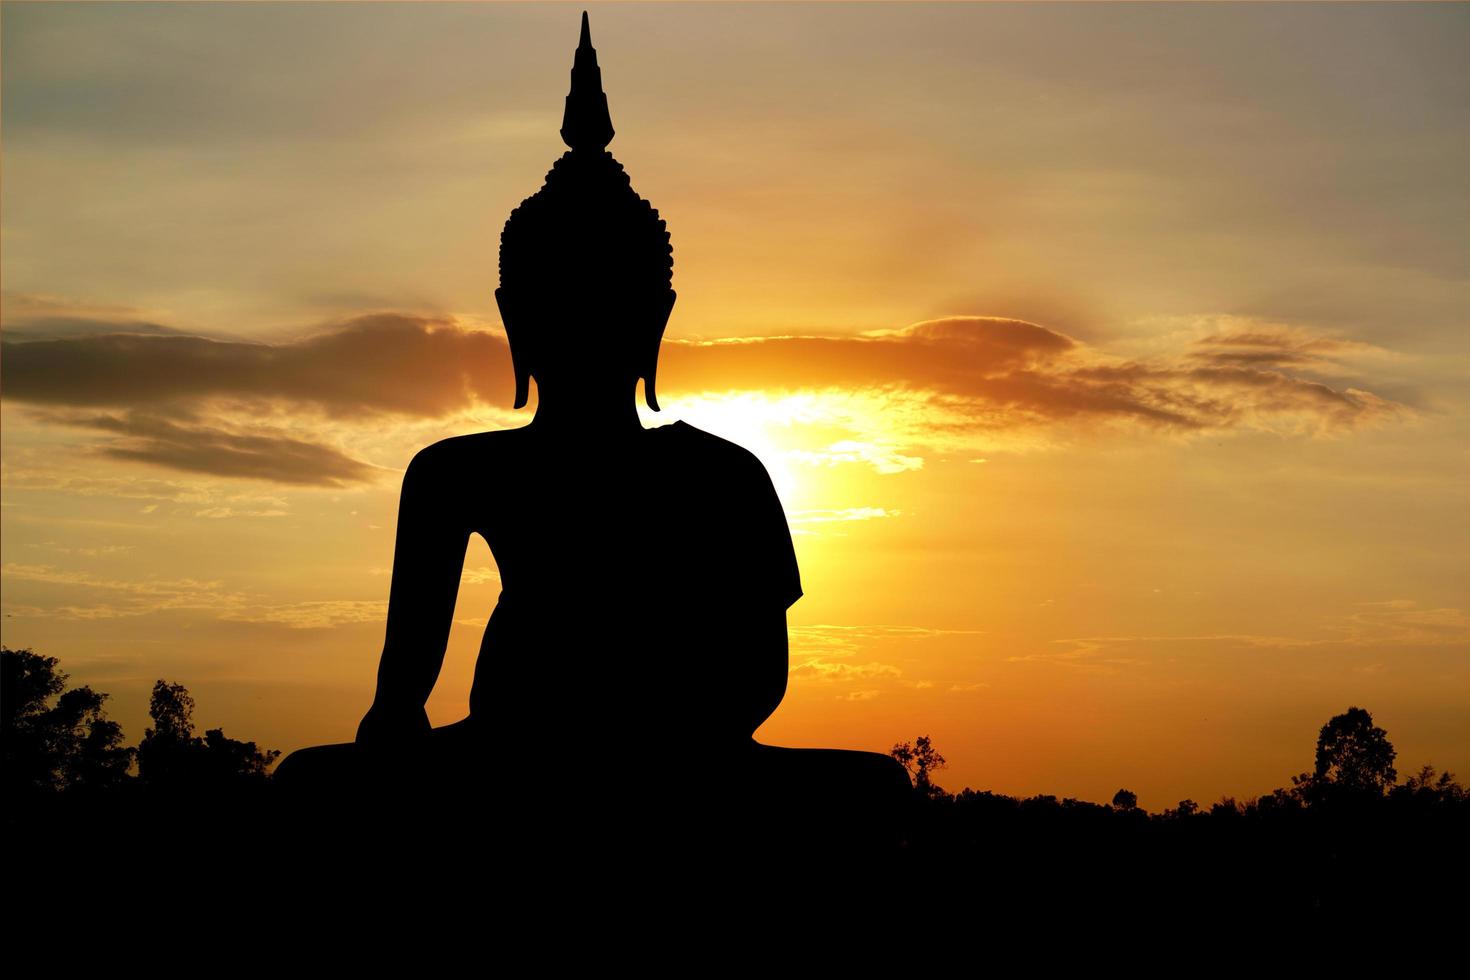 fondo de puesta de sol de silueta de gran buda.makha bucha day.vesak day.asanha bucha.buddhist cuaresma. foto